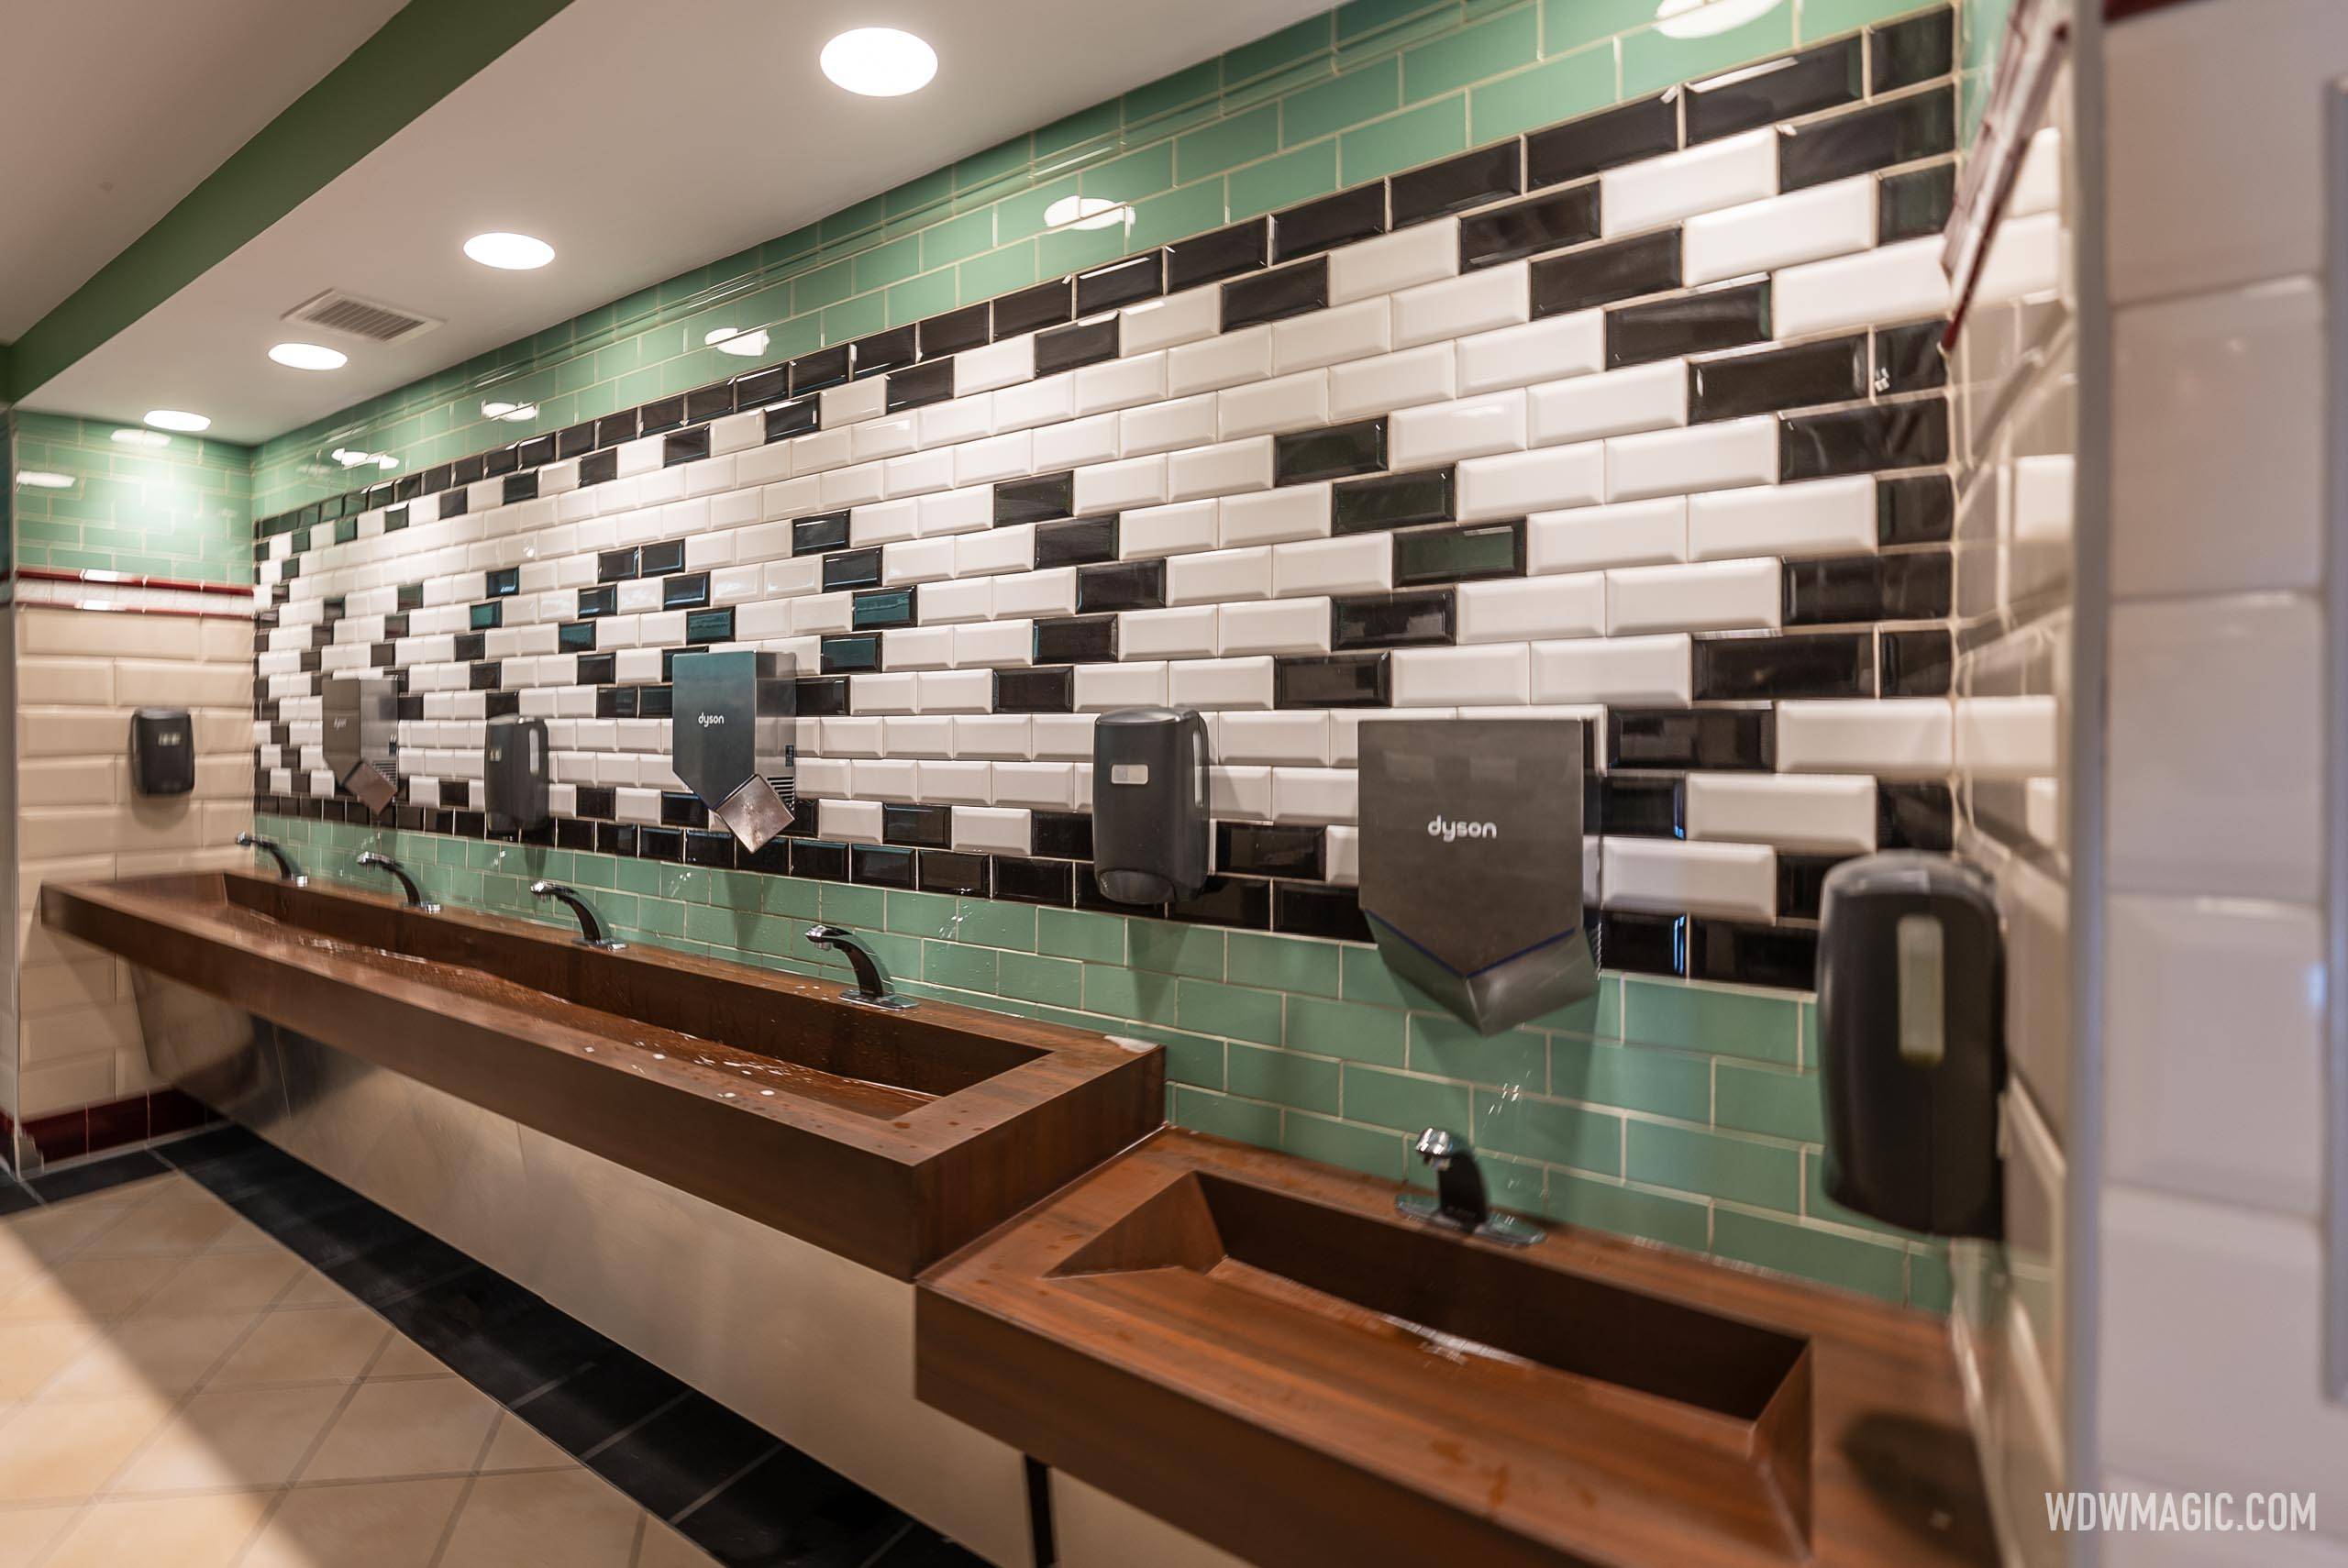 United Kingdom restrooms refurbishment completed